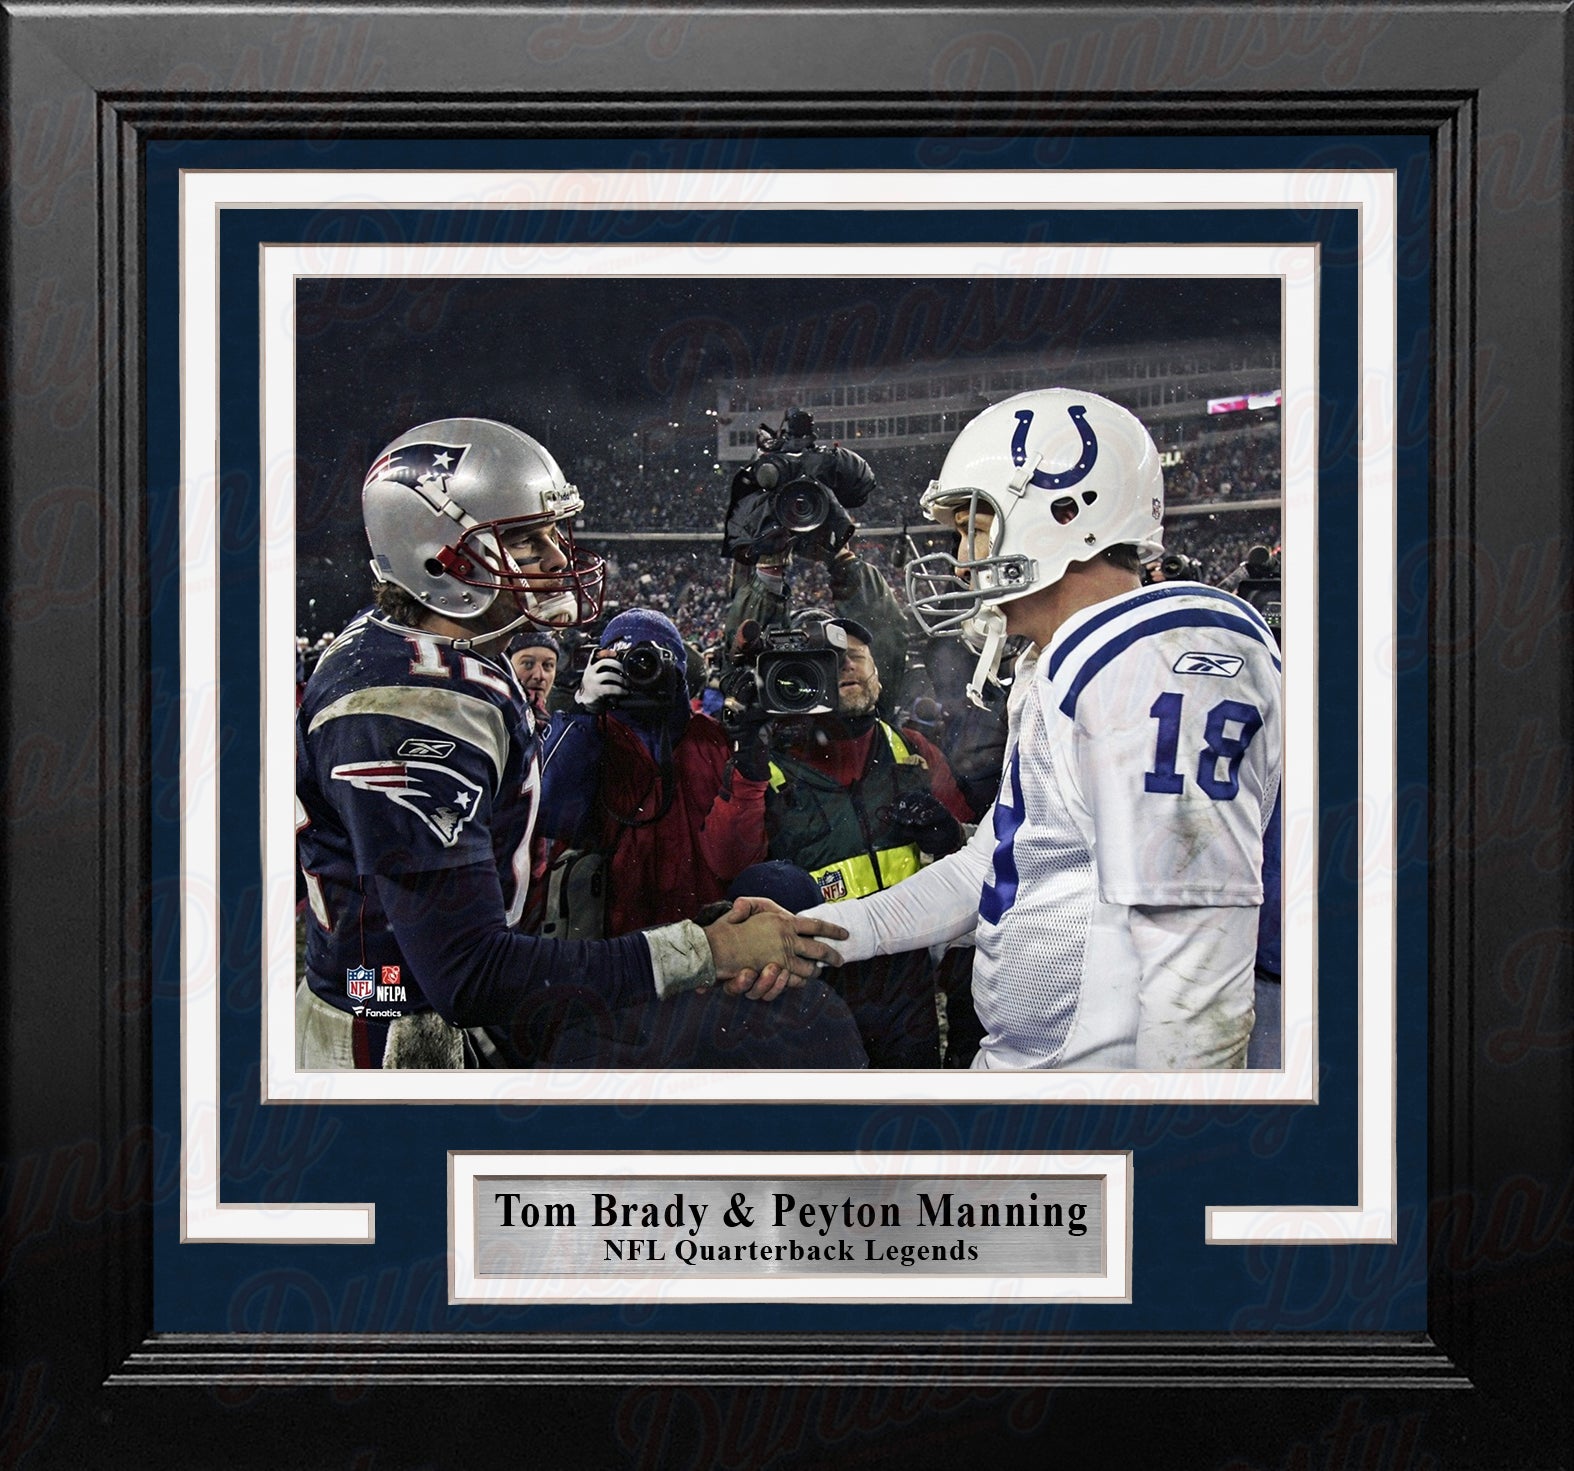 Tom Brady and Peyton Manning 8" x 10" Quarterback Legends Framed Football Photo - Dynasty Sports & Framing 